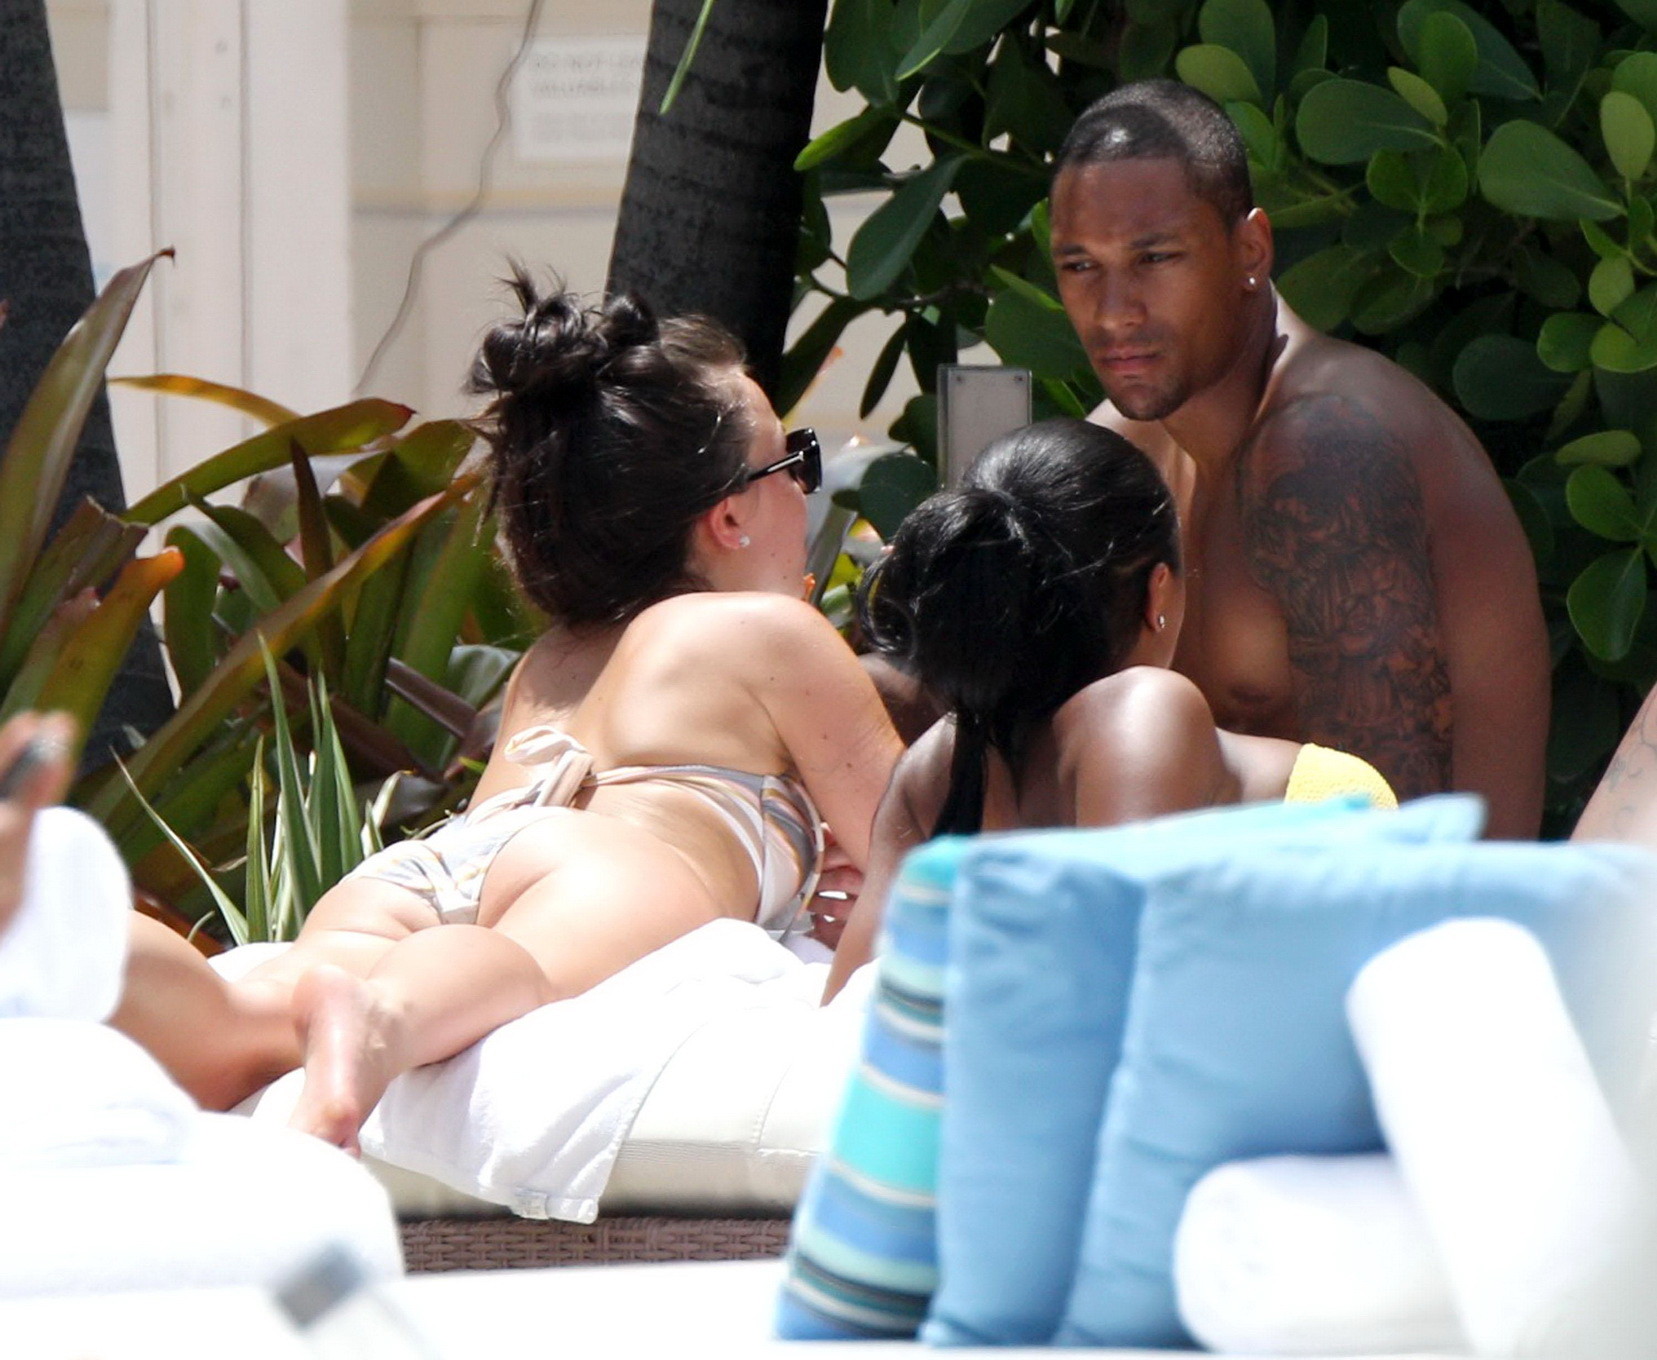 Louisa Lytton showing off her ass in bikini at the hotel pool in Miami #75229700